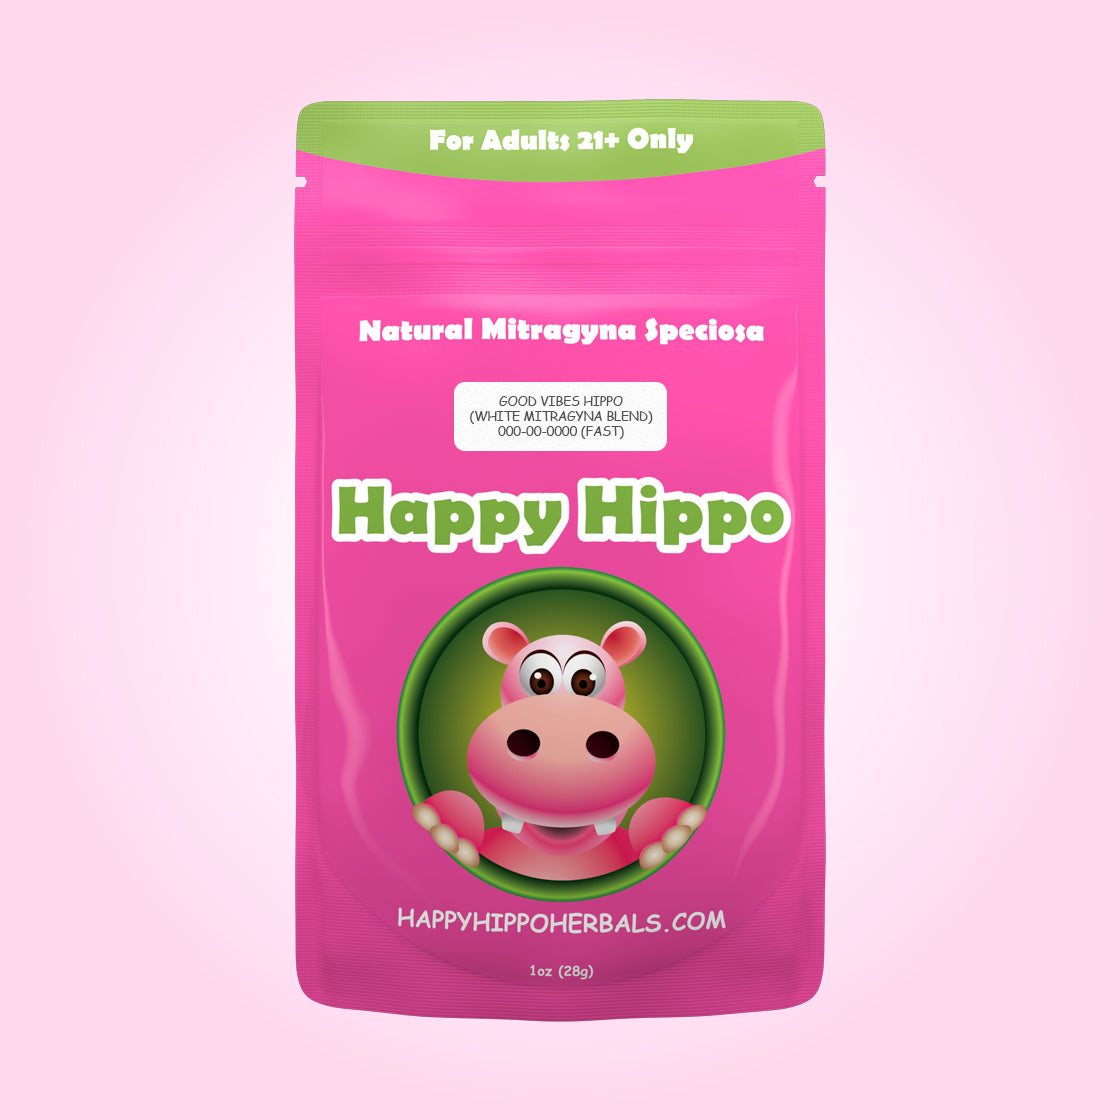 Good Vibes Hippo